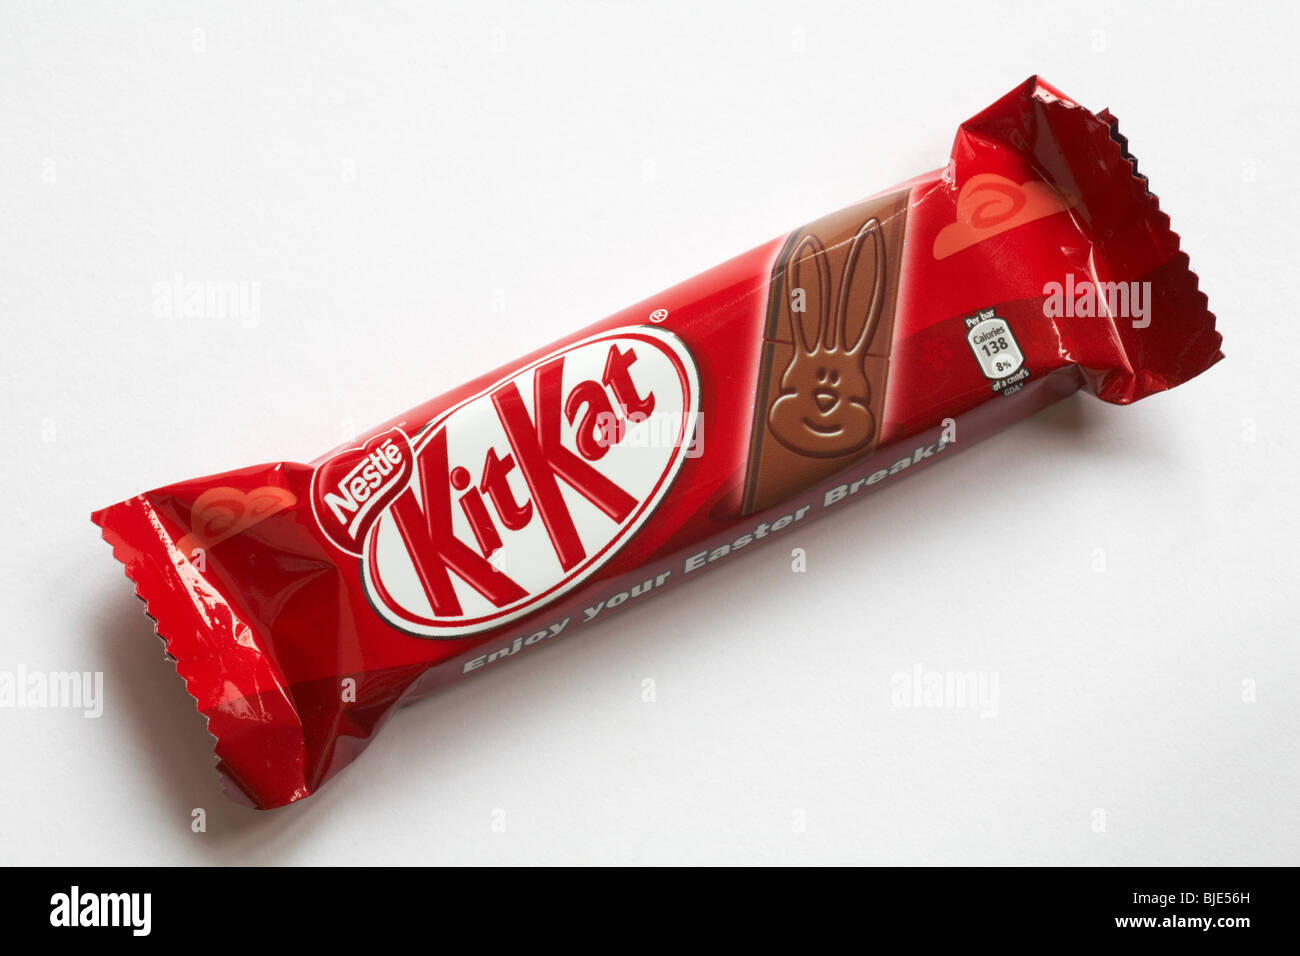 Nestle kit kat dark chocolate bar hi-res stock photography and